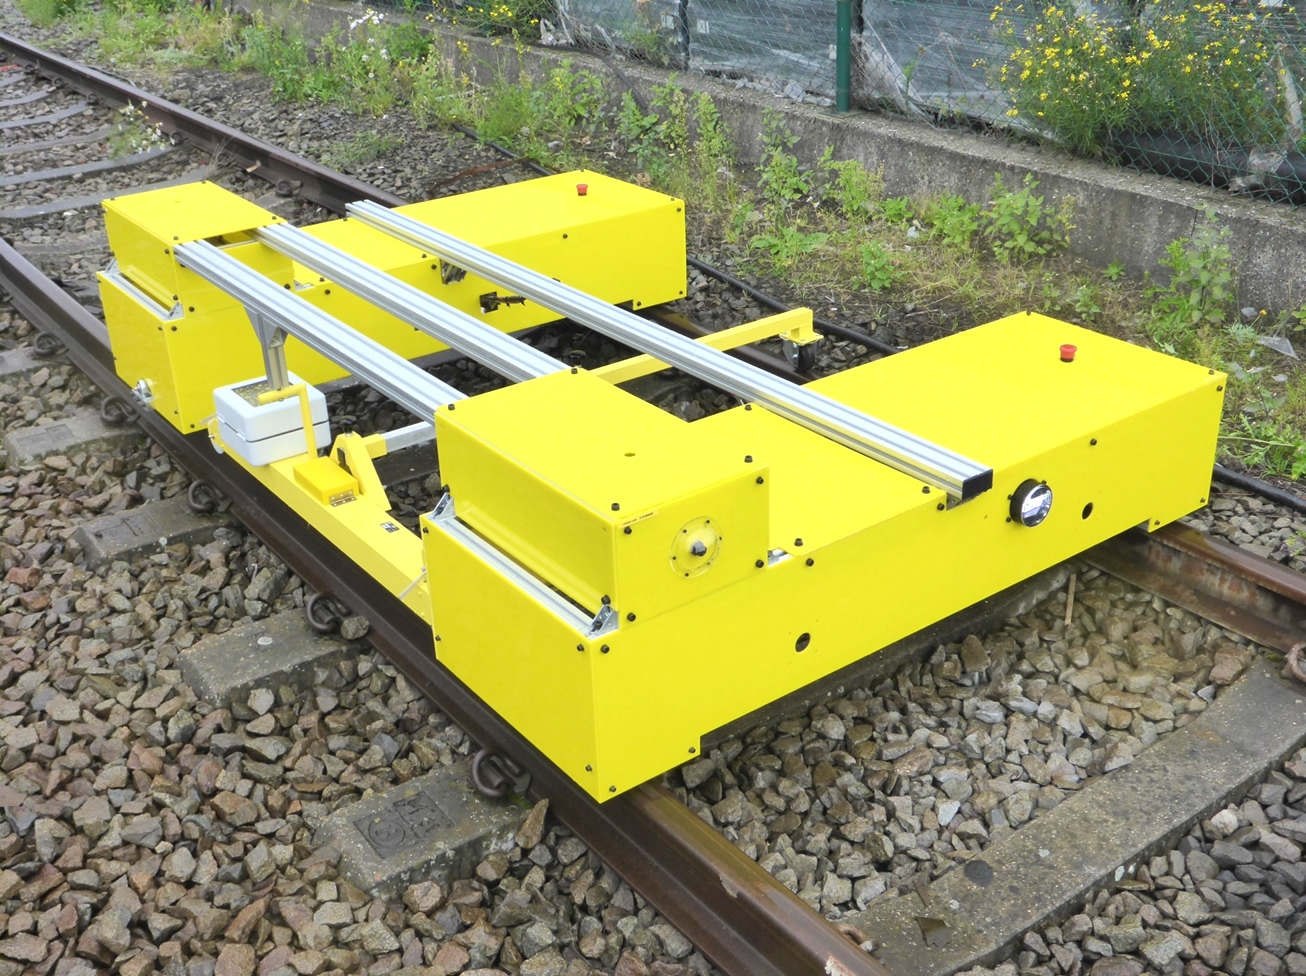  RCF Scanner system default configuration for rail corrugation detection